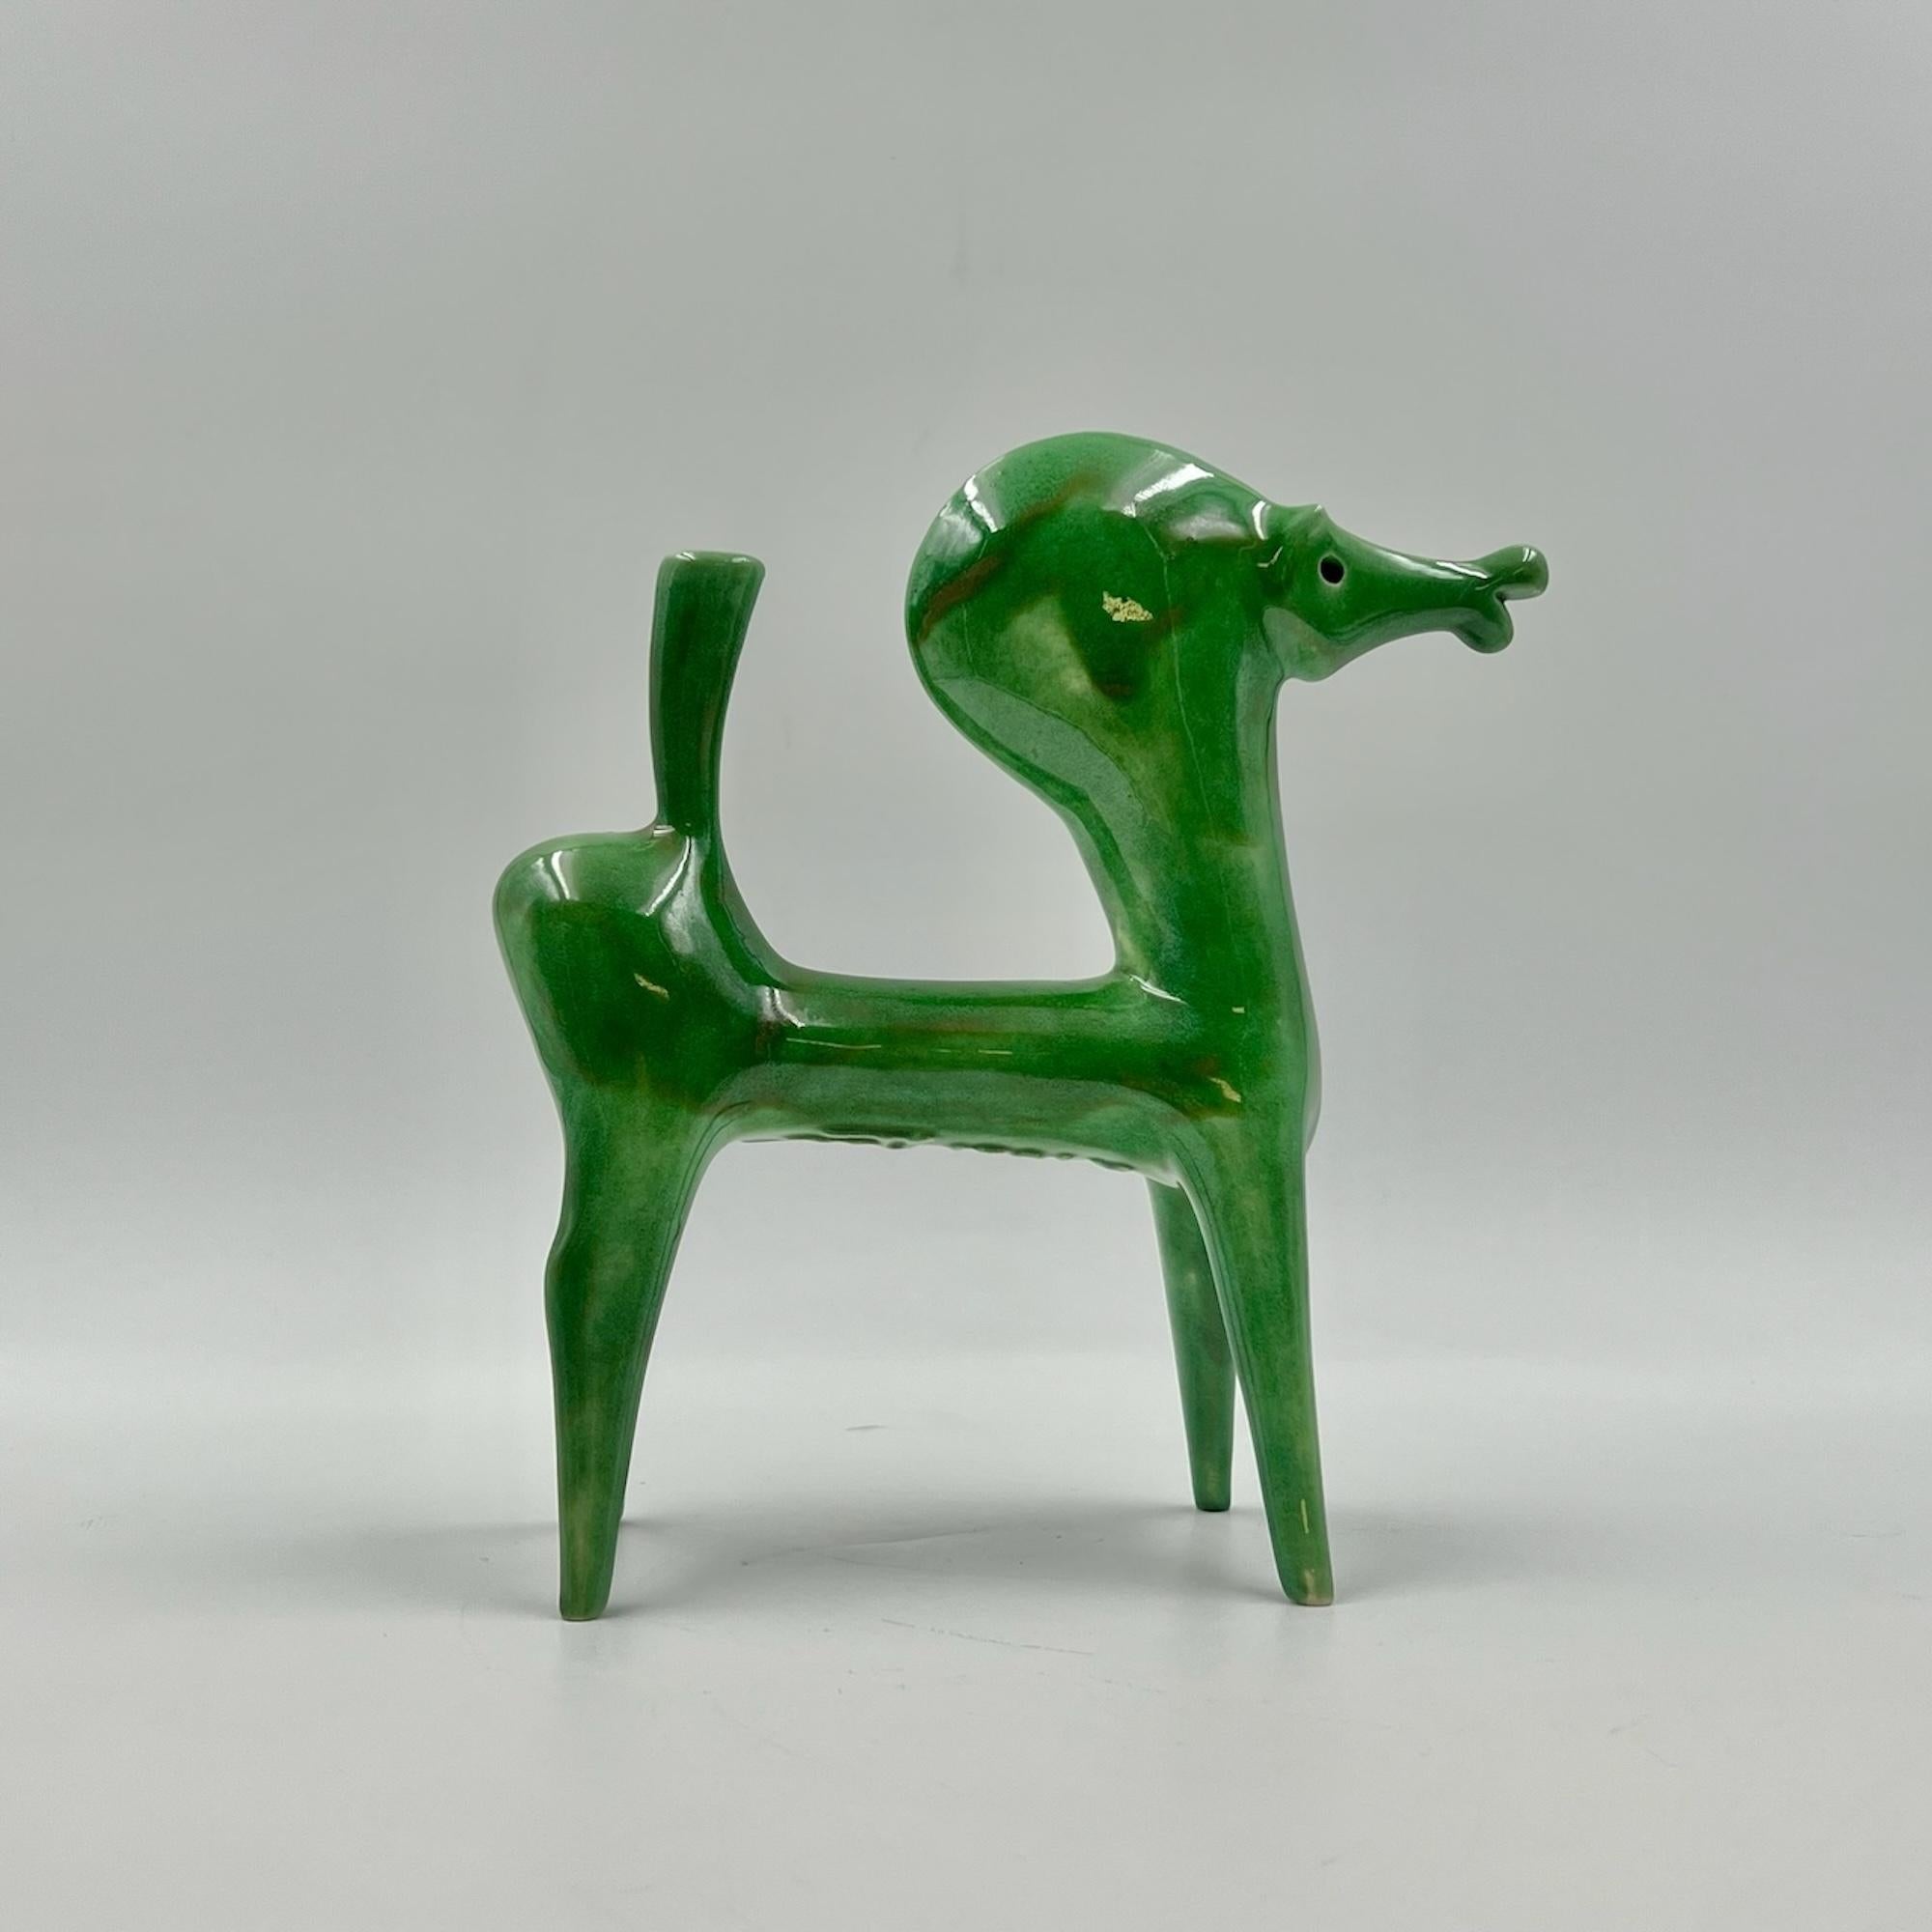 Green Ceramic Horse Figurine - 1970s Handmade Sculpture by Roberto Rigon Italy  For Sale 4